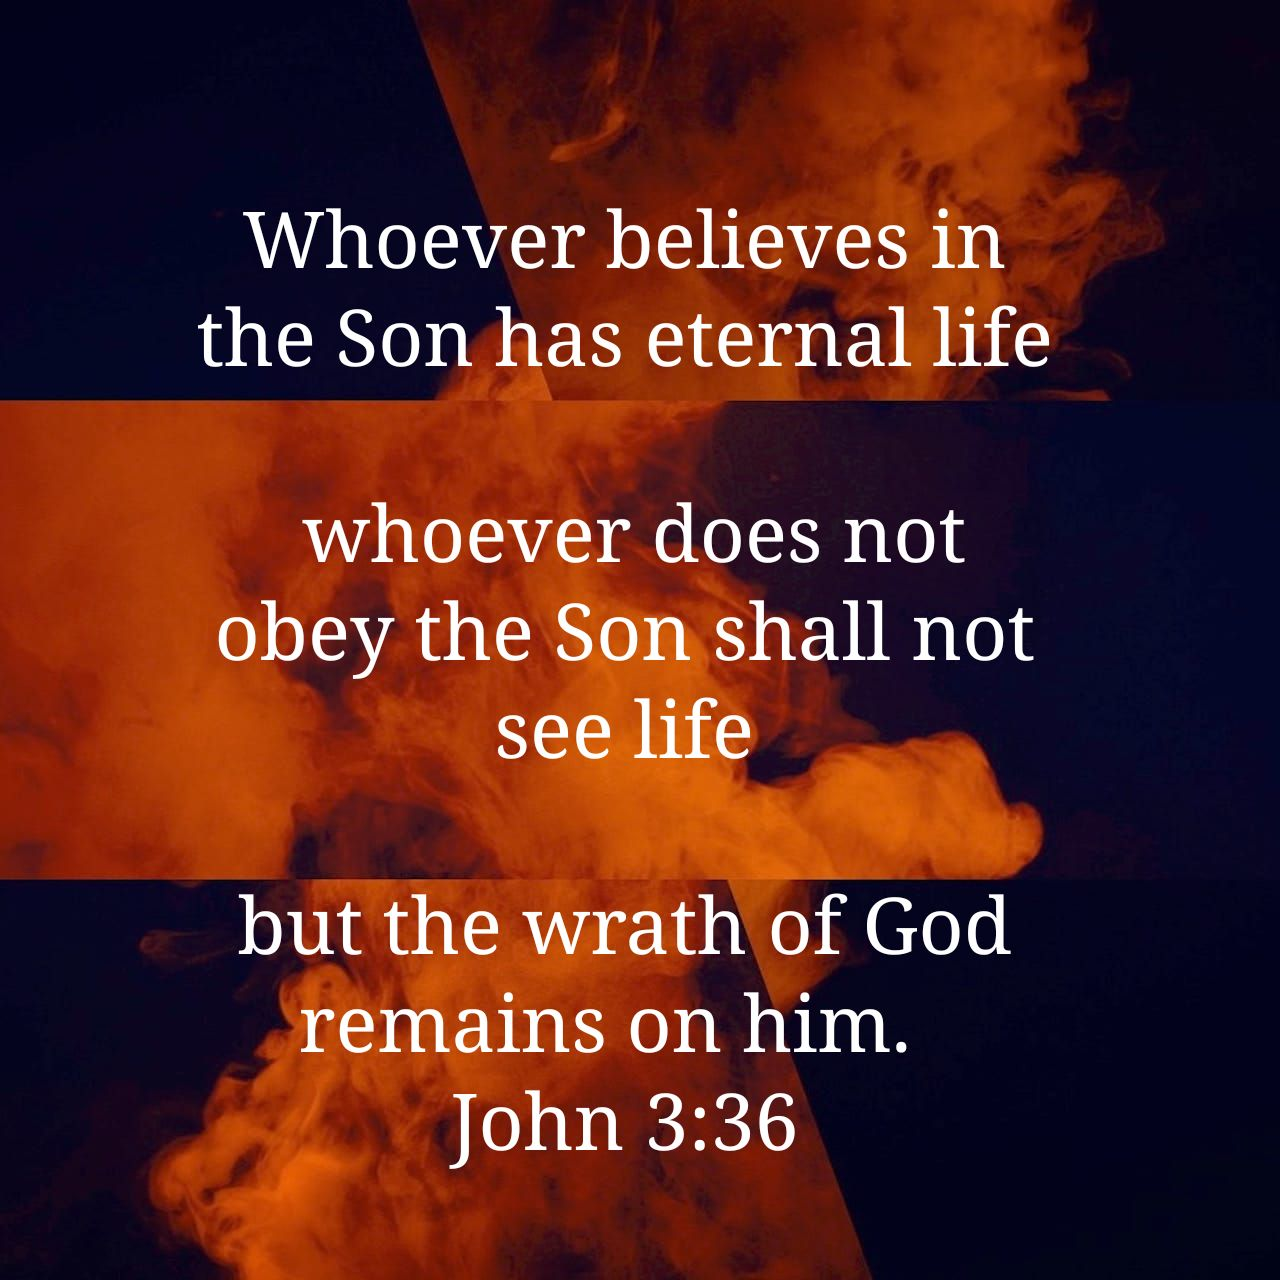 Daily Bible Reading: John 3:22-36